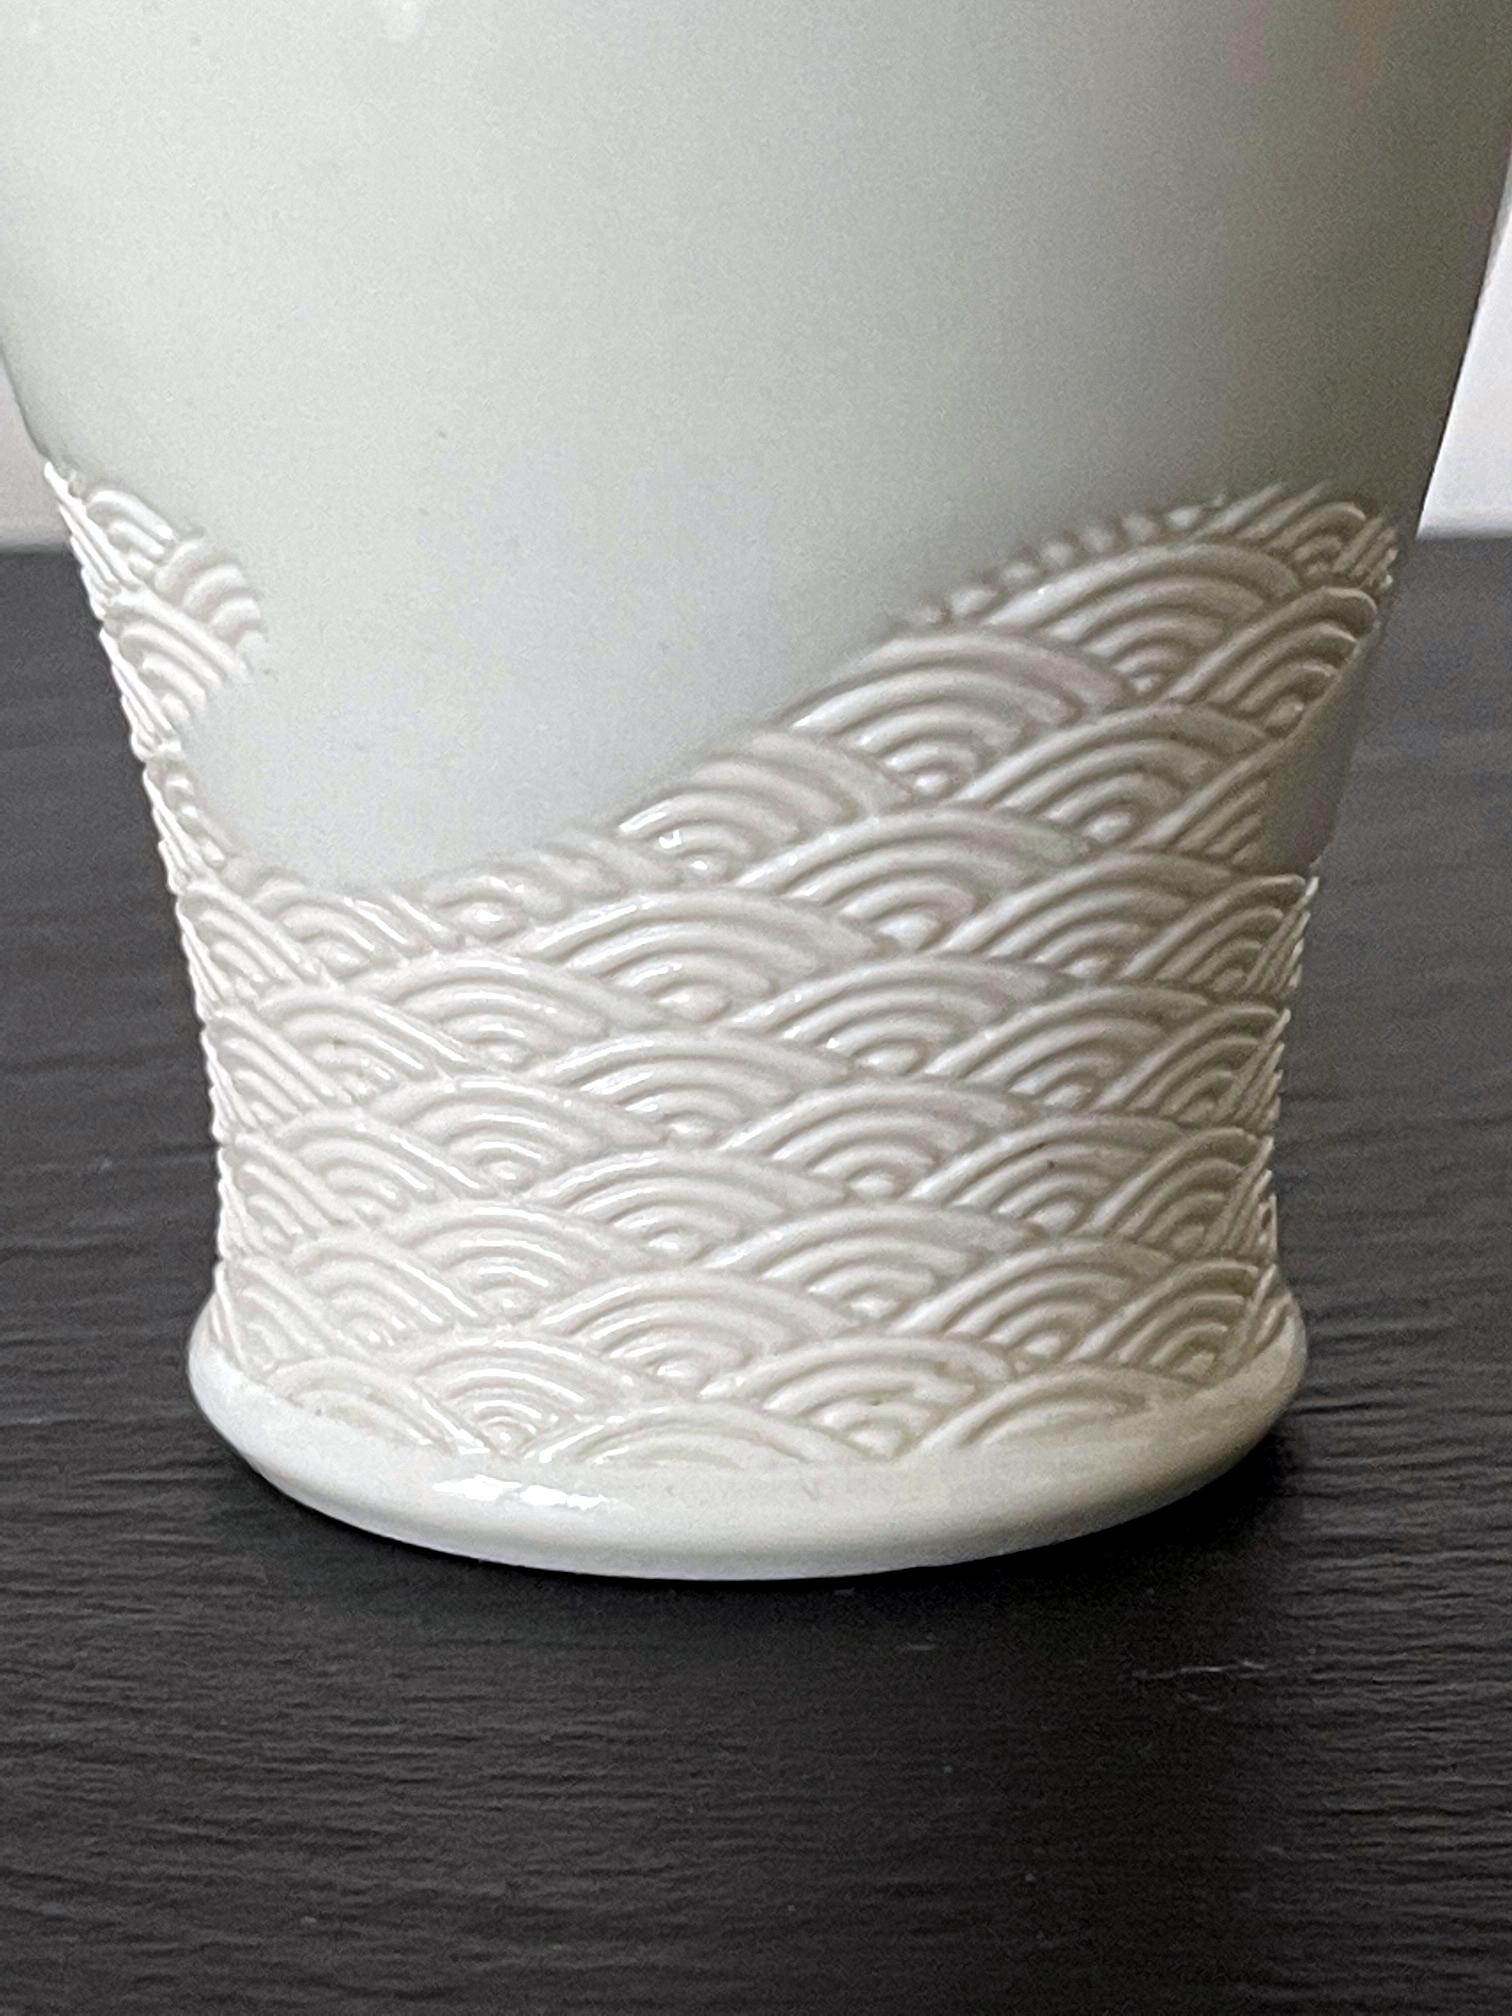 Japanese Ceramic Vase with Delicate Carvings by Makuzu Kozan Meiji Period For Sale 11